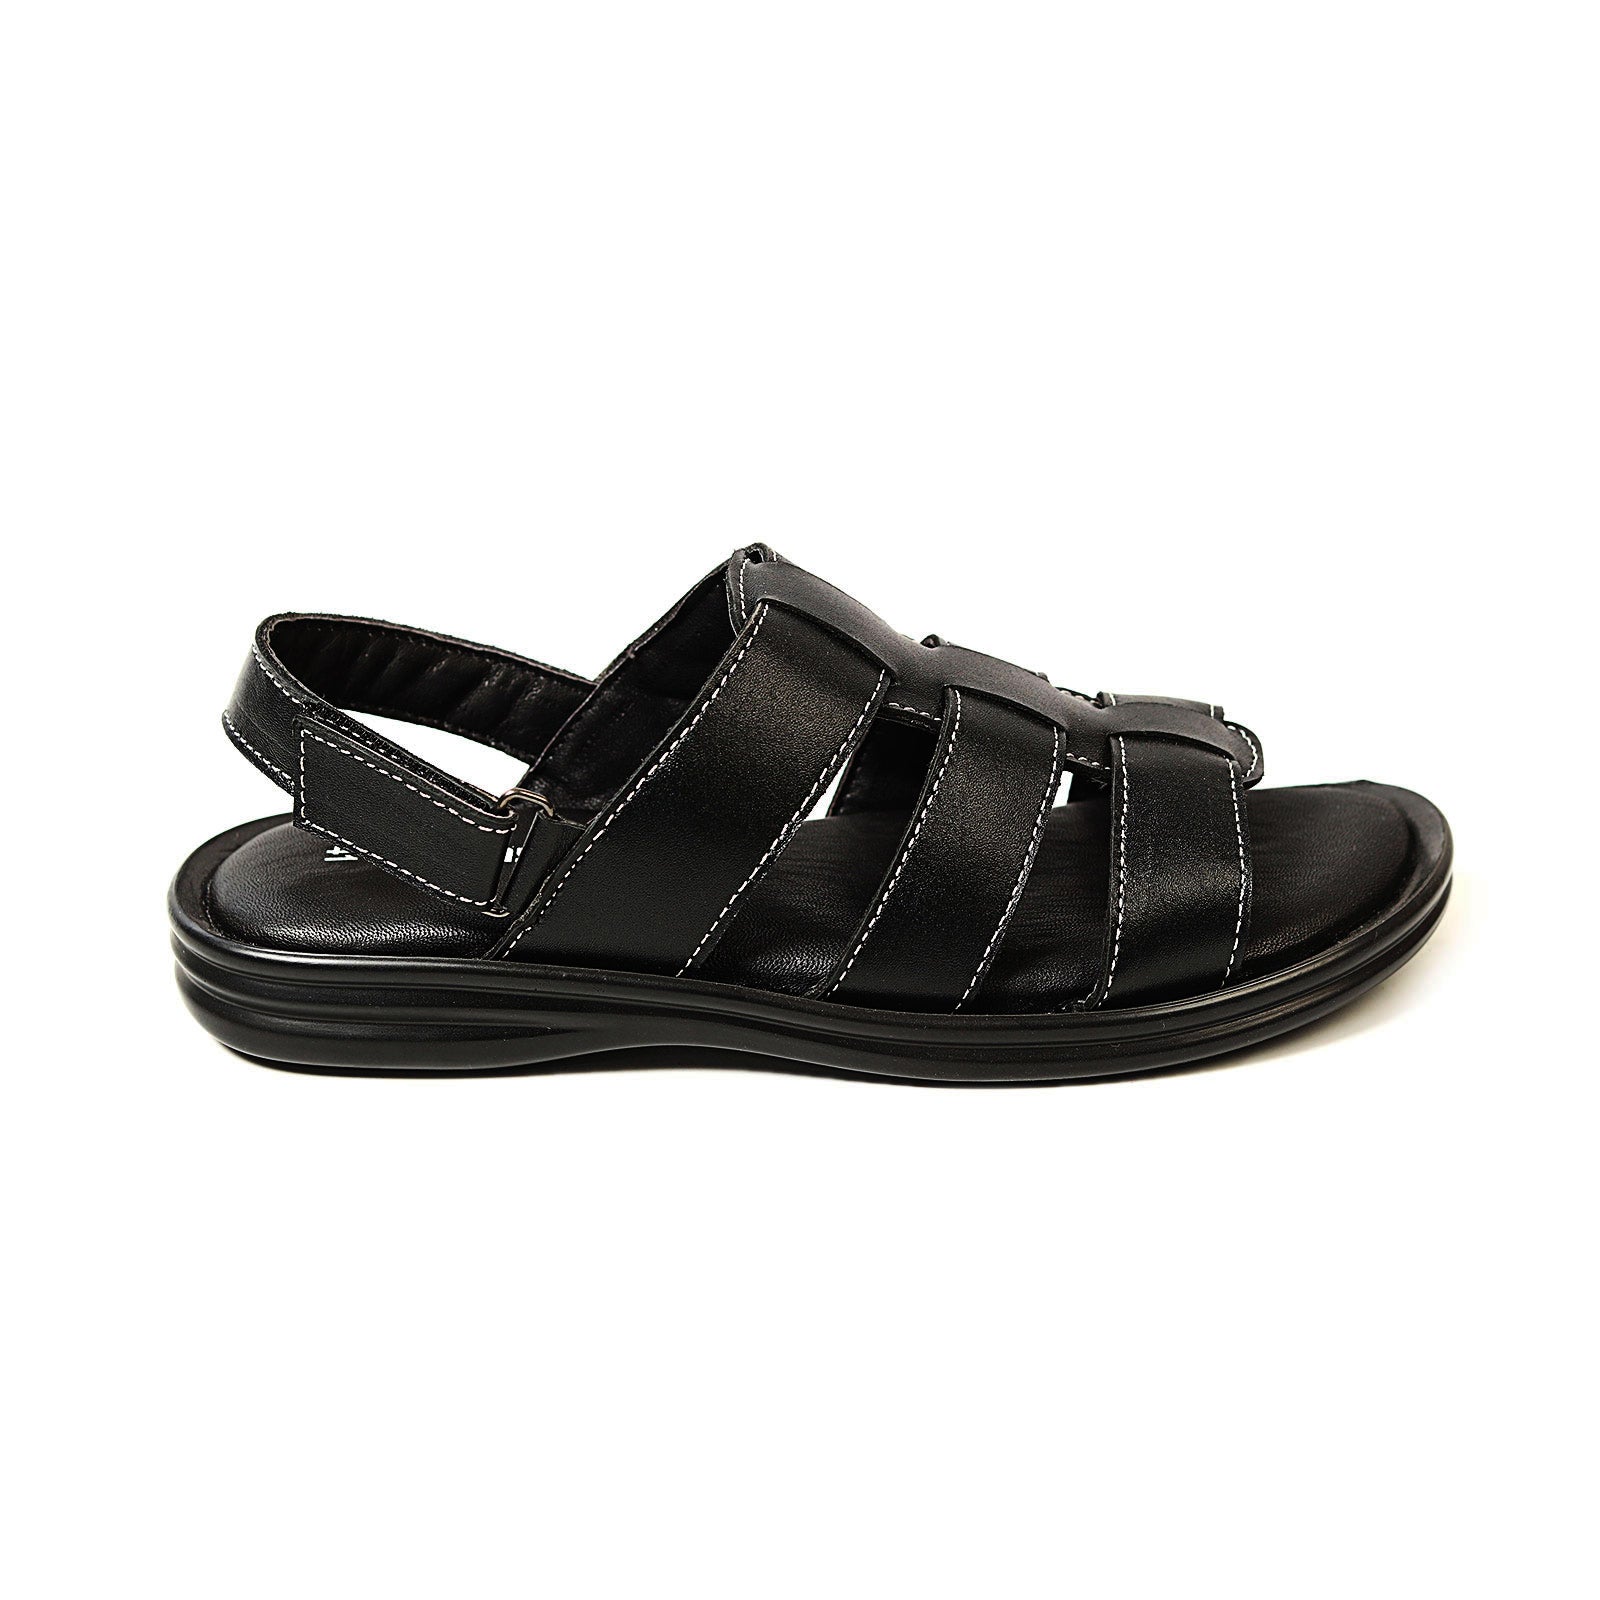 Zays Leather Sandal For Men (Black) - ZA10